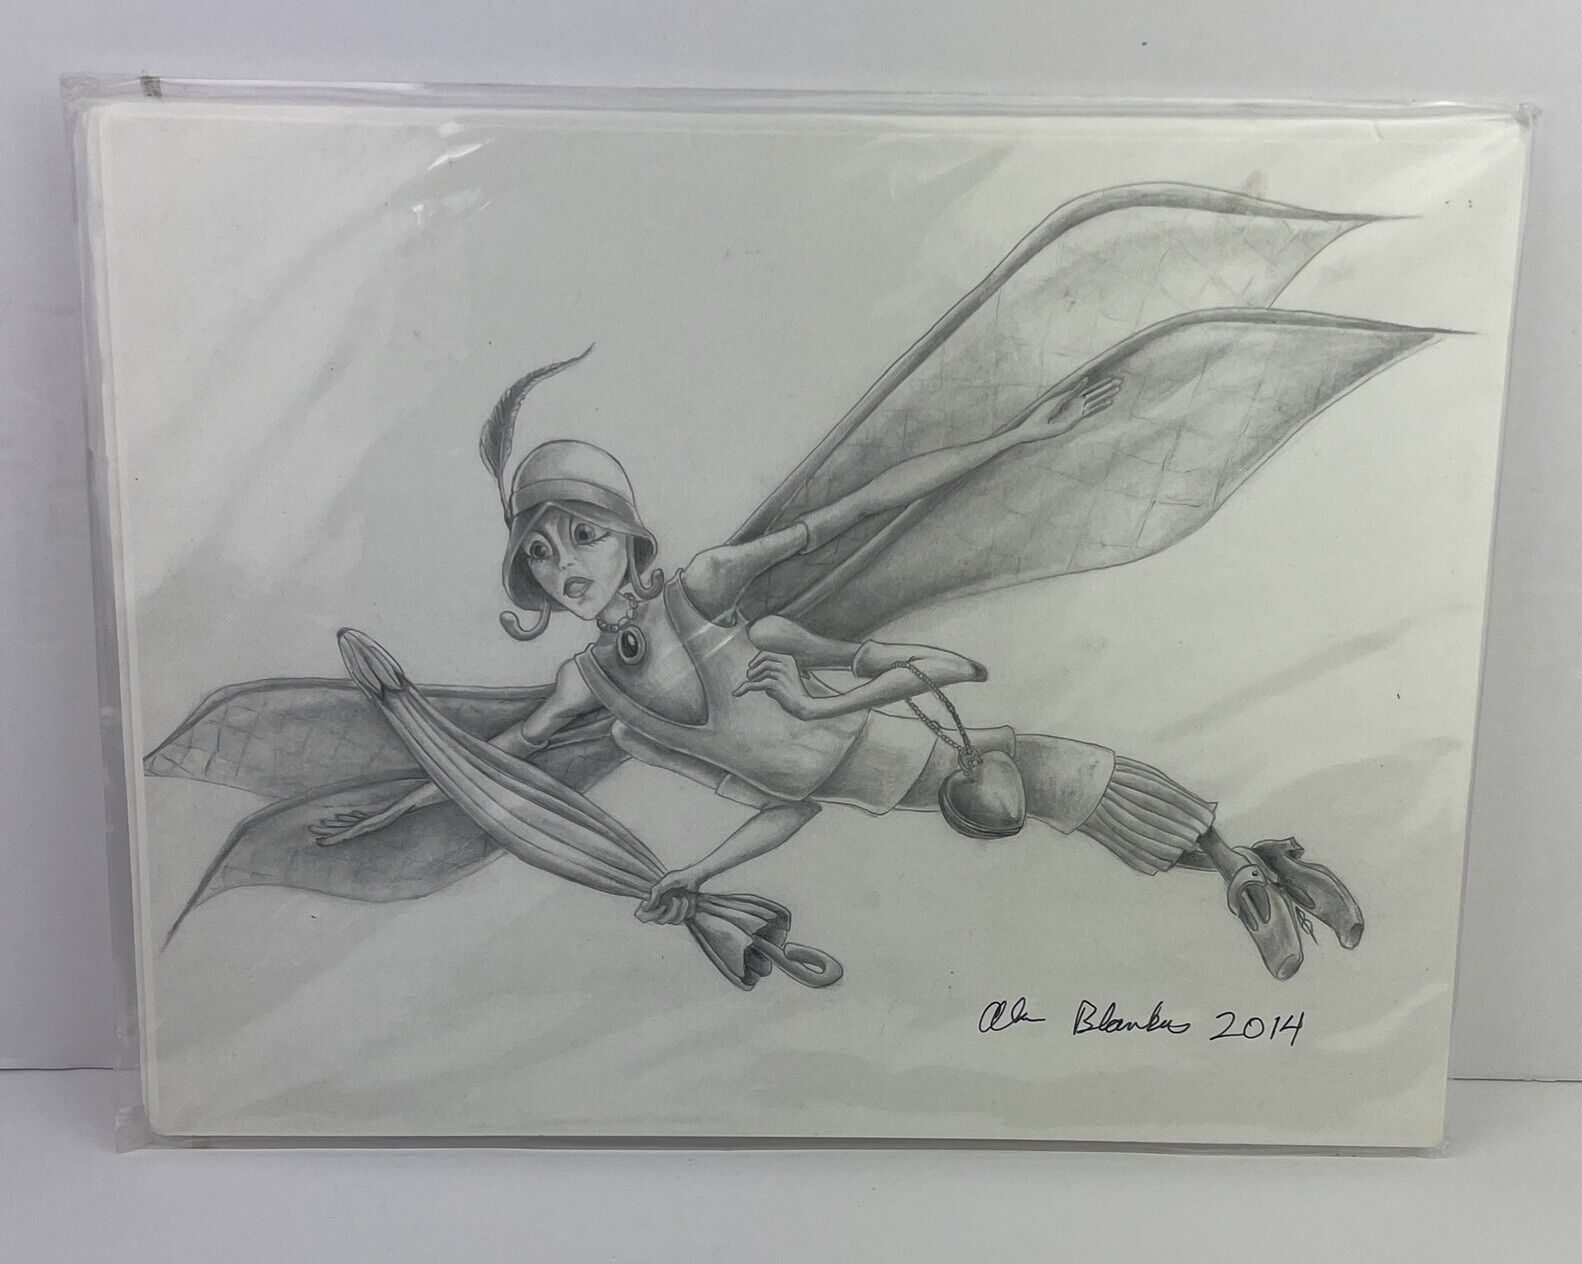 Alan Blanka Artist Signed Re-Print 2014 Dragonfly Flying Women Mythical Fairies